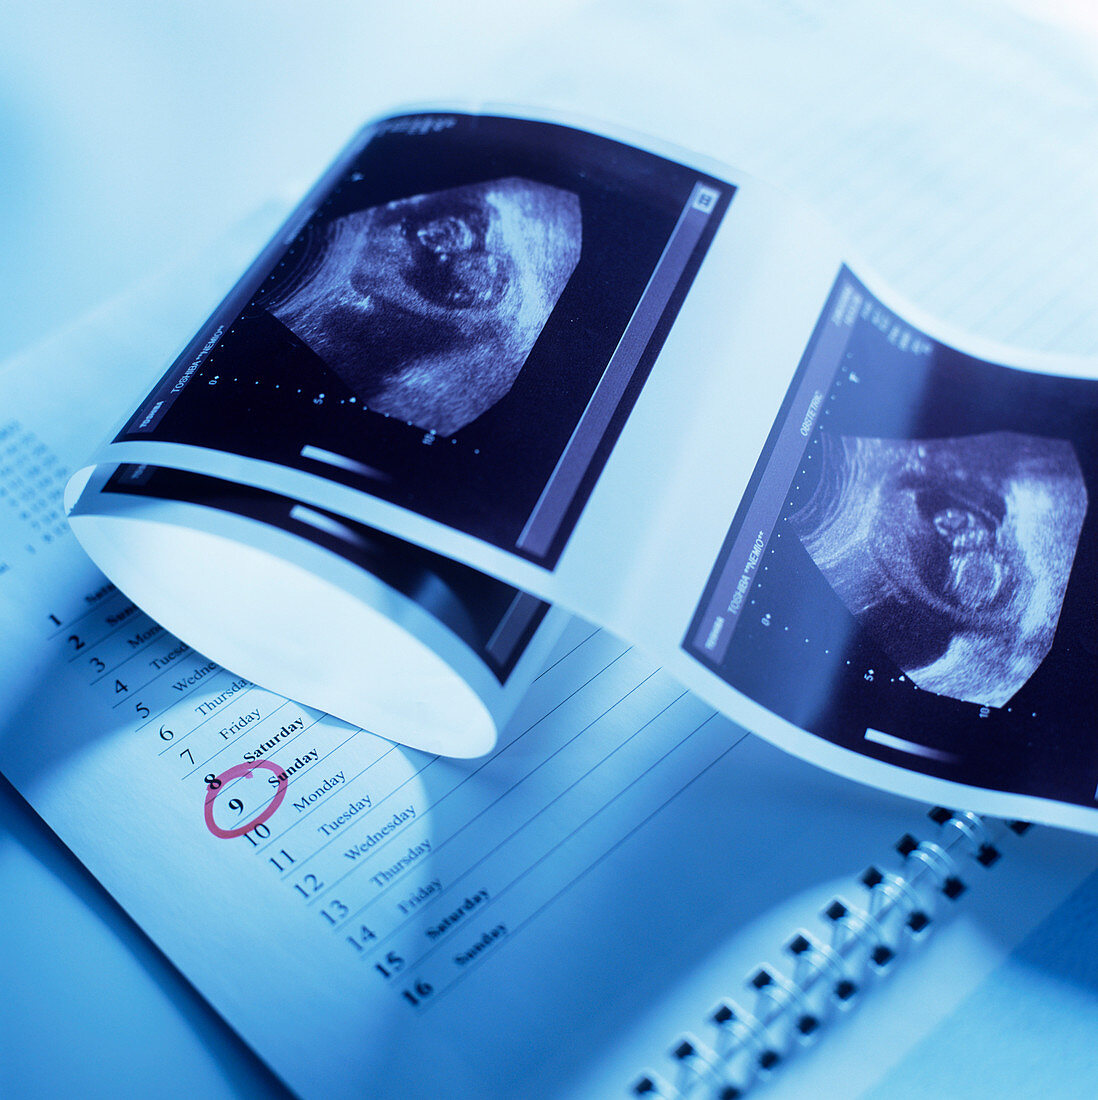 Foetus ultrasound